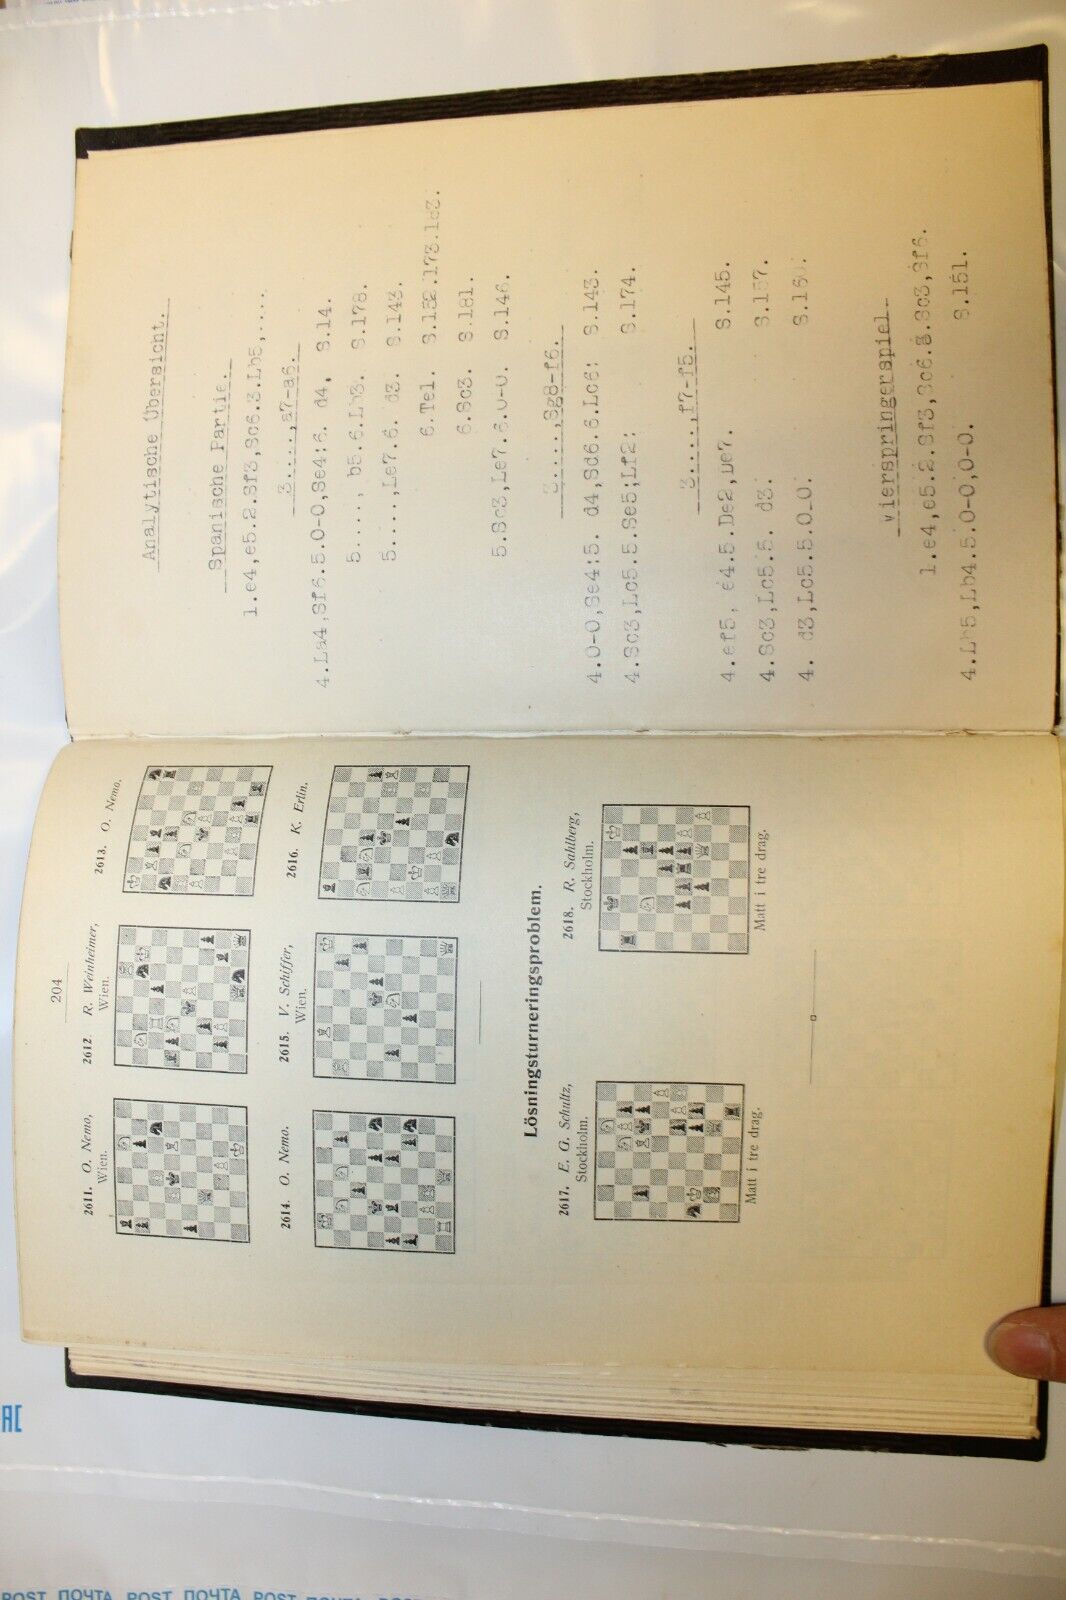 11884.Swedish Chess Book: Tredje Kongress Med Turnering. Stockholm 1905